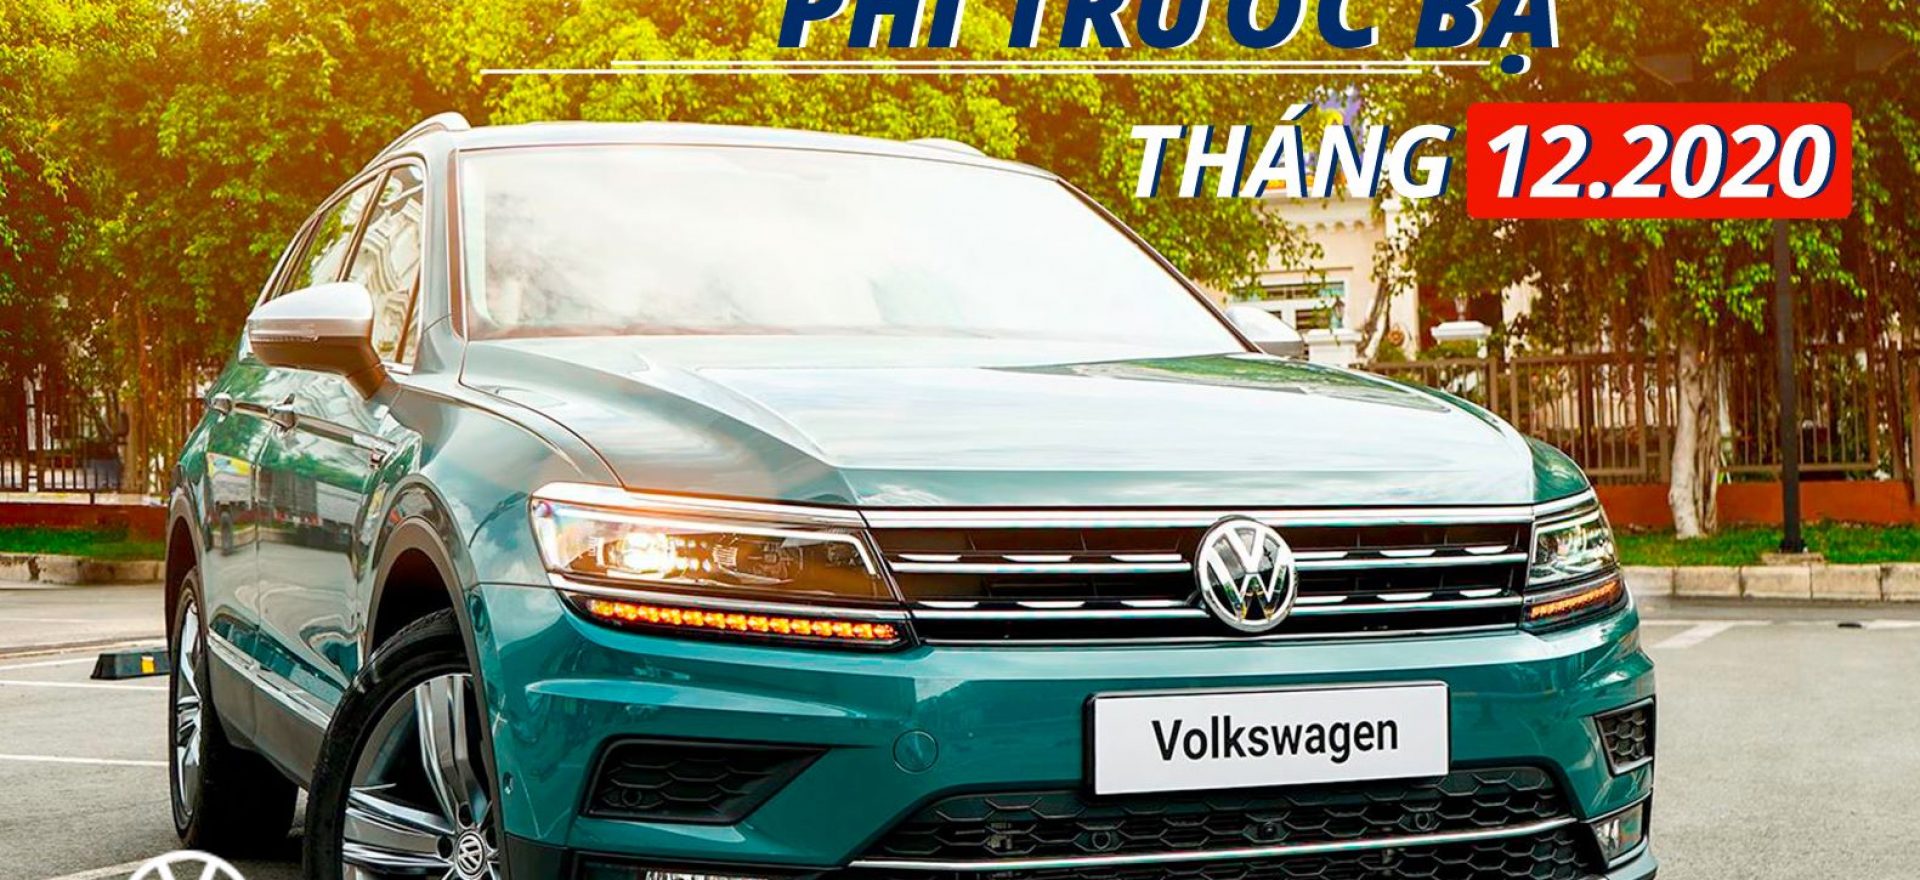 Volkswagen Khuyen mai thang 12/2020 - Volkswagen Sai Gon